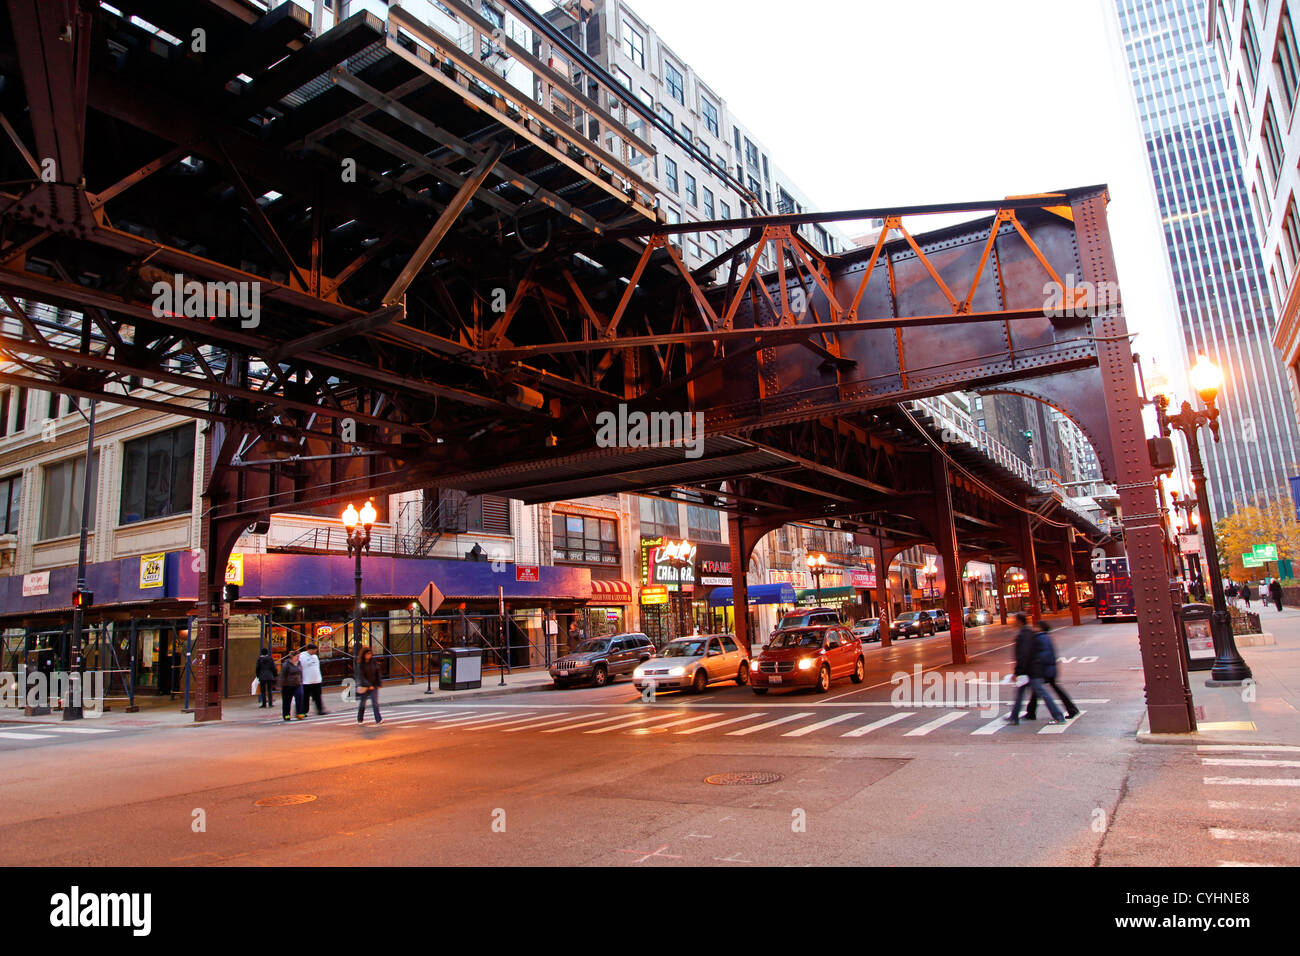 Chicago overhead CTA, city transit authority, subway train tracks above the street, Illinois, America Stock Photo